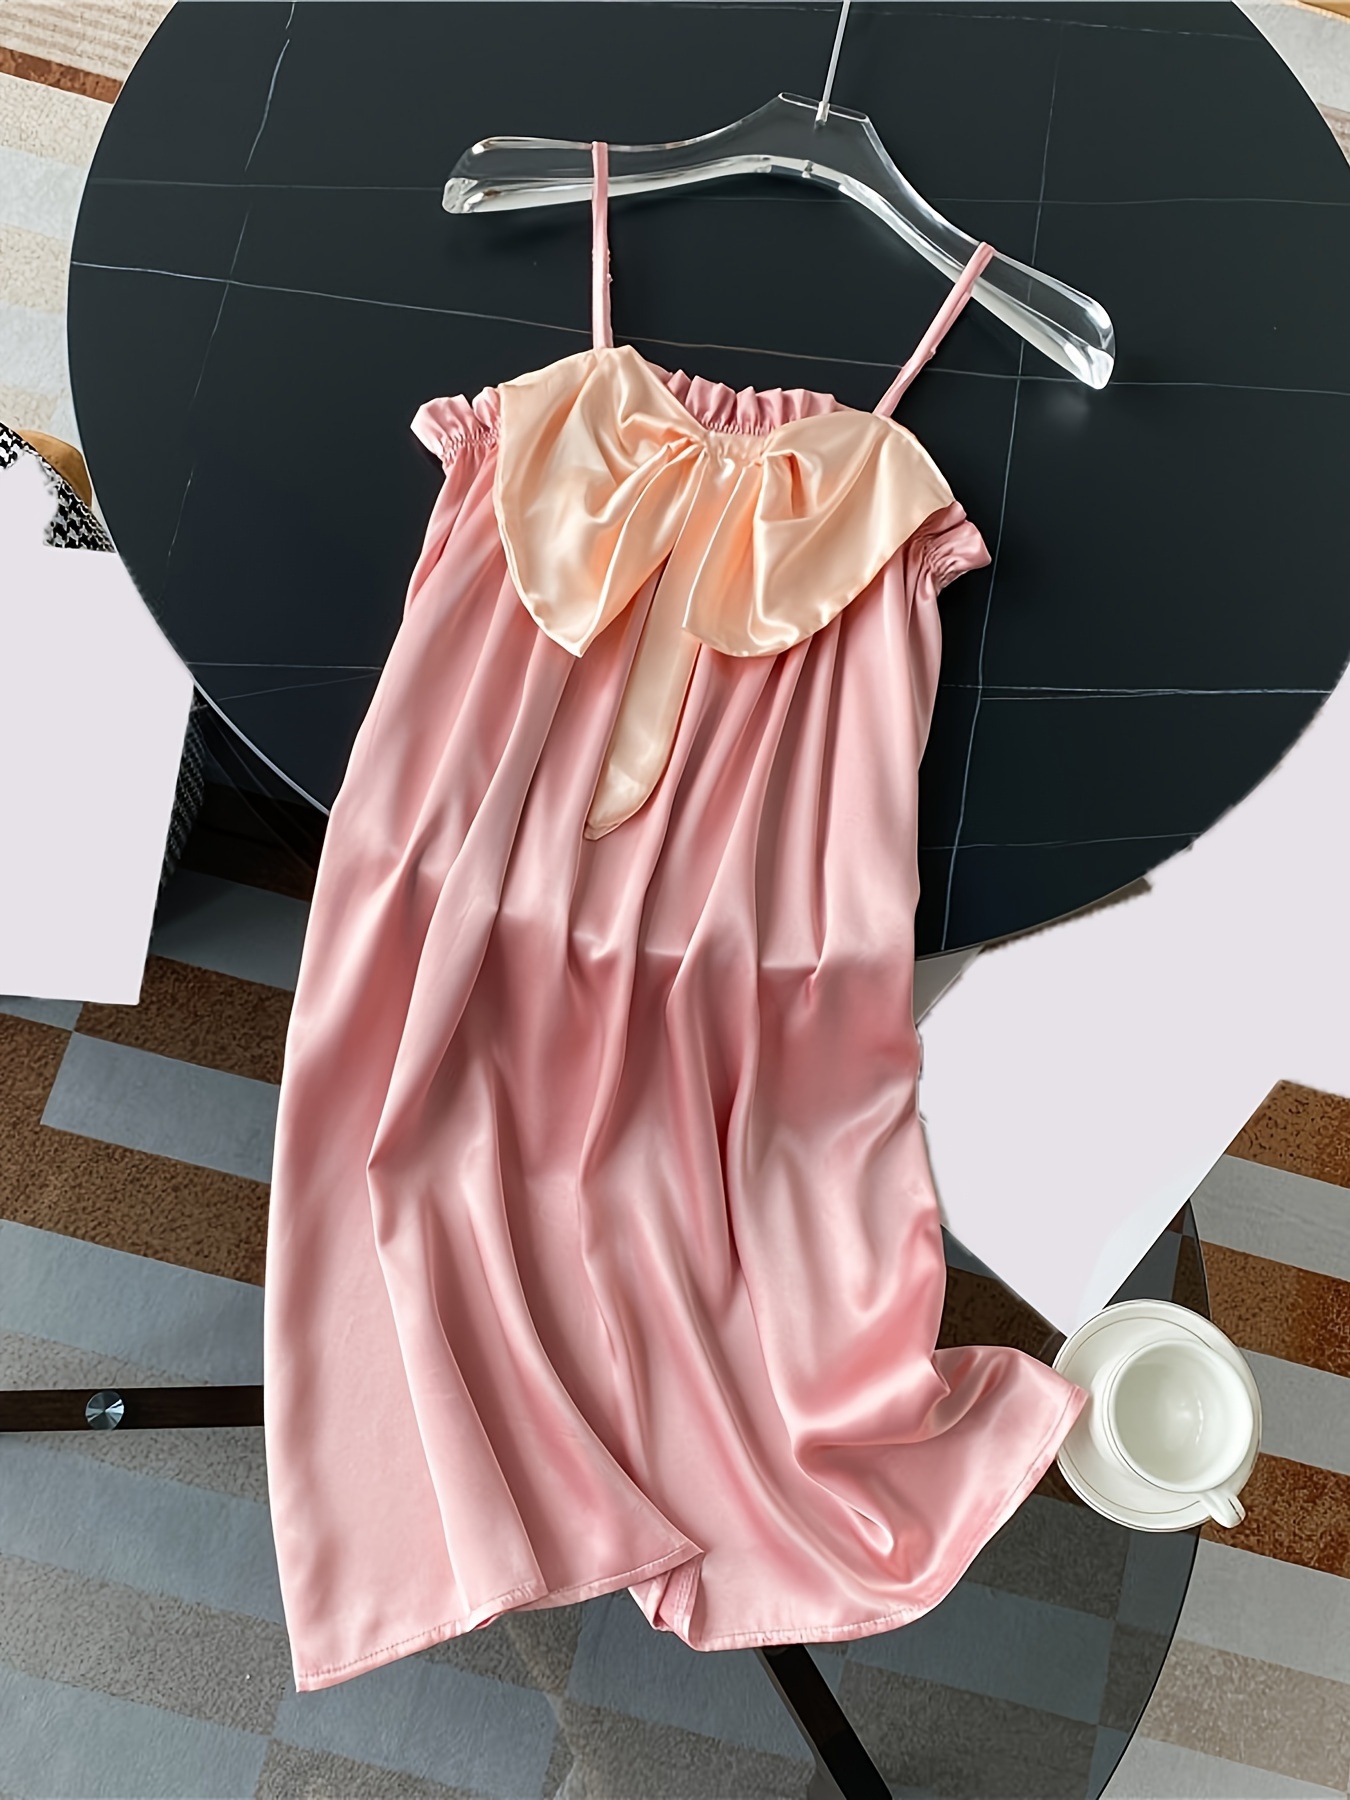 WXMTMDSB Woman Sexy Silk Dress Sleepwear - Summer Nightdress Vintage Lace  Nightie Elegant Nightwear Long Nightgowns Pink Nighty,Soft Jogging Homewear